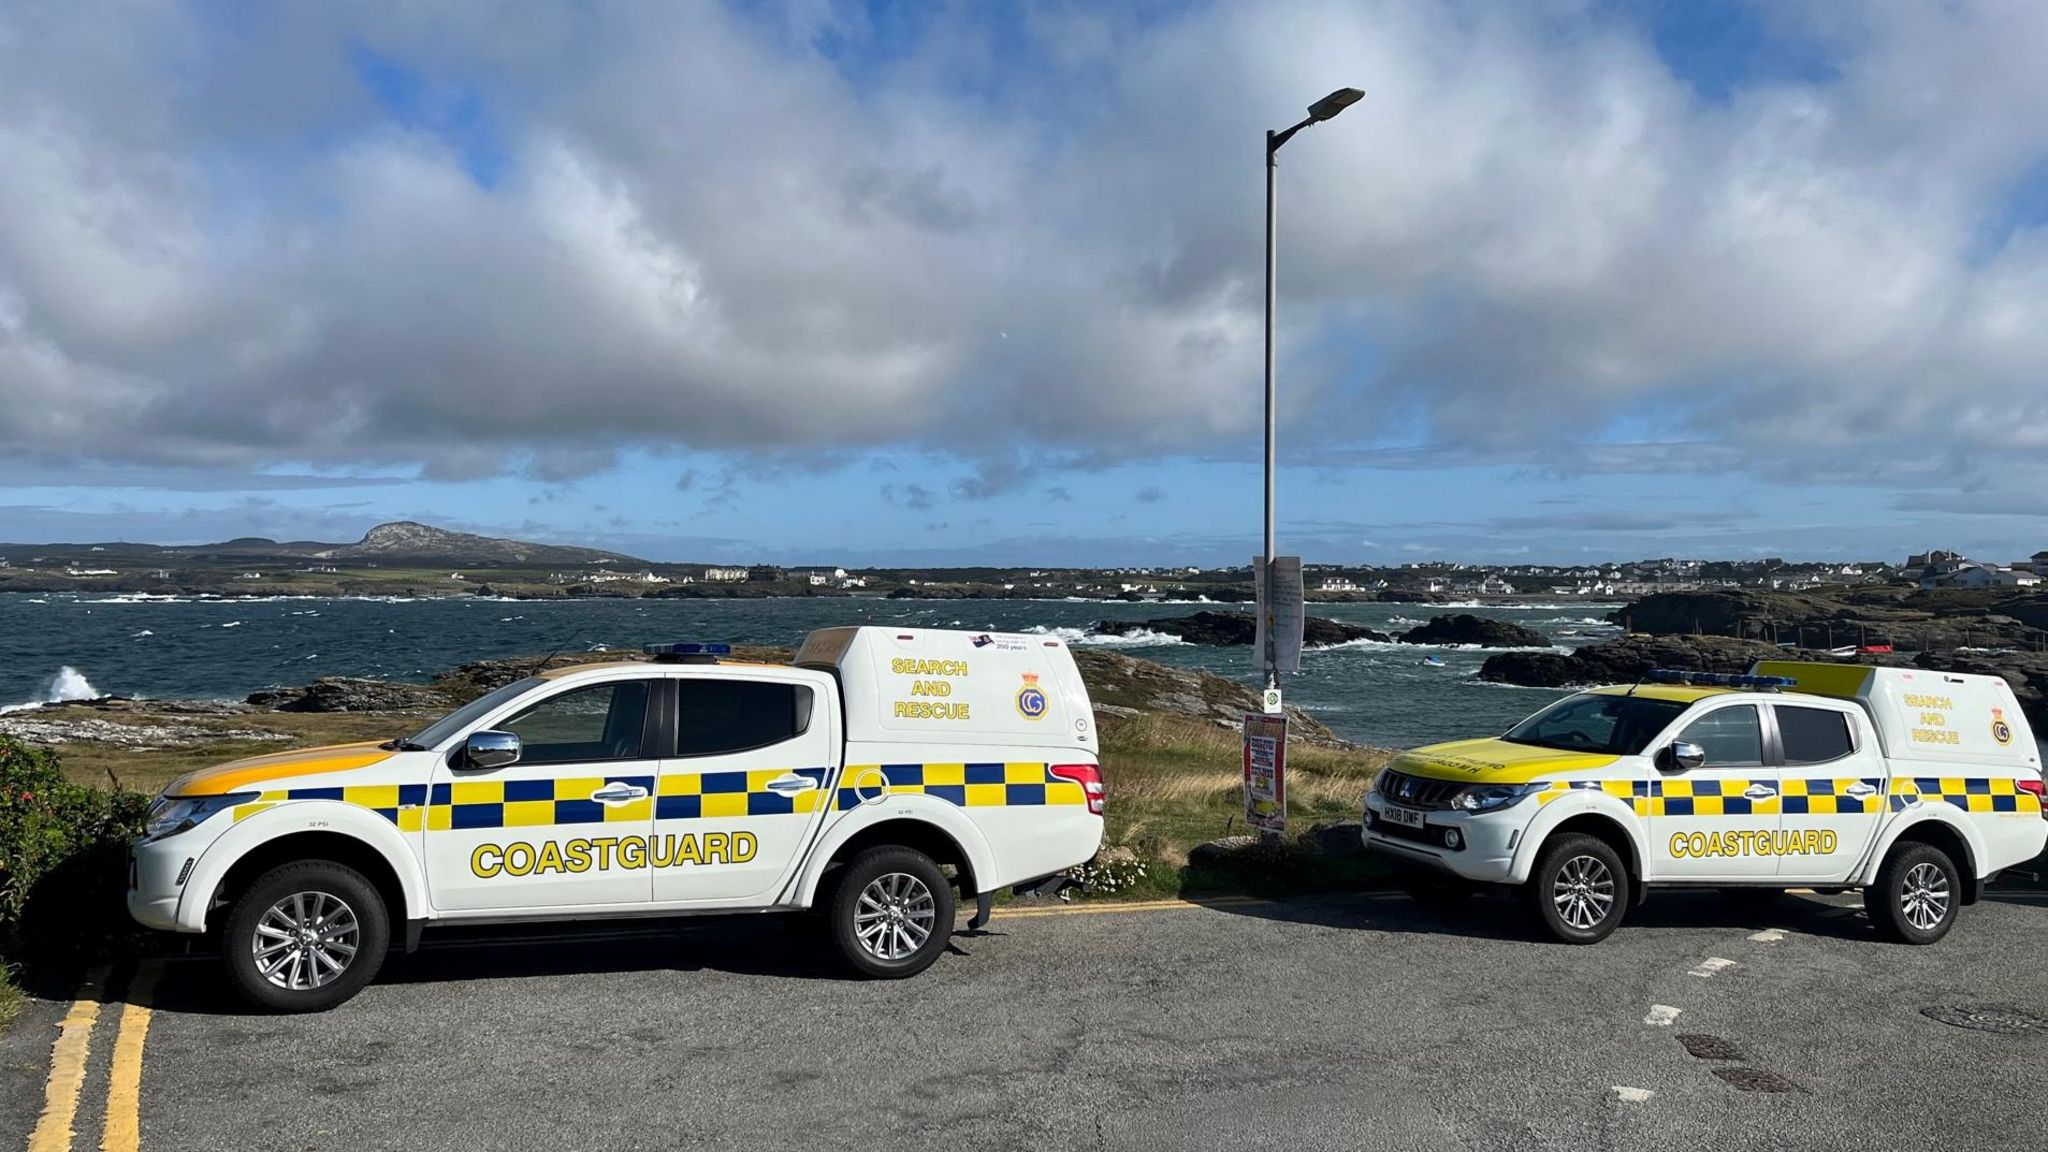 Coastguard vehicles at the scene